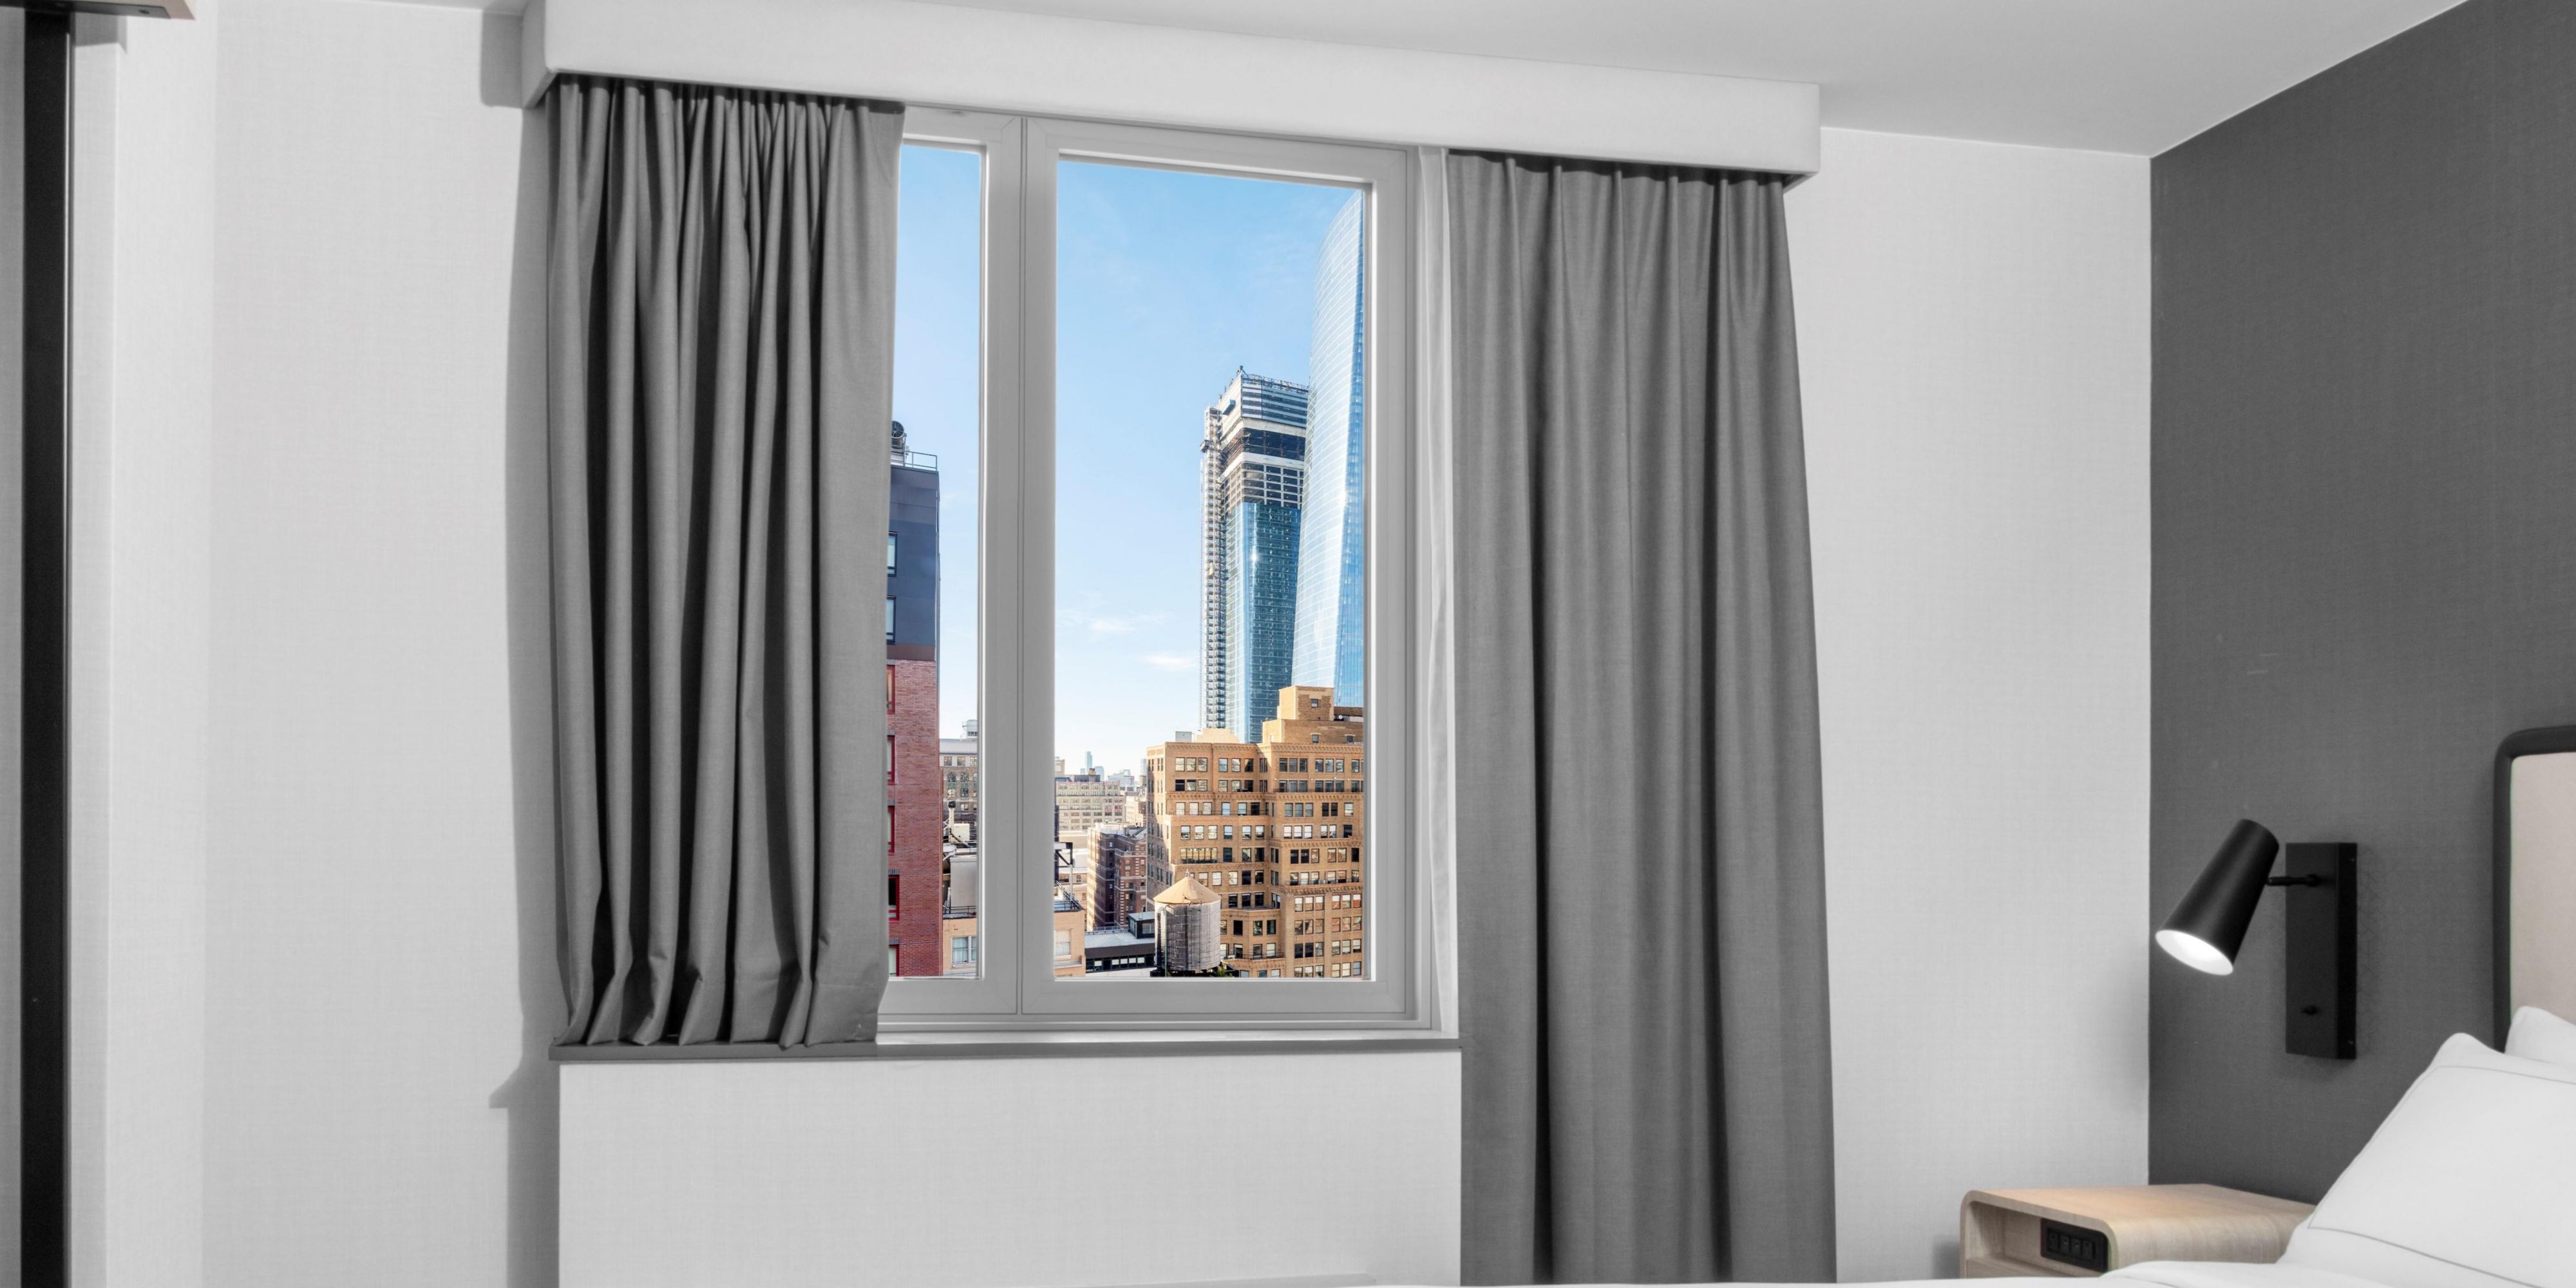 Premium guest rooms offer views of the Manhattan skyline.